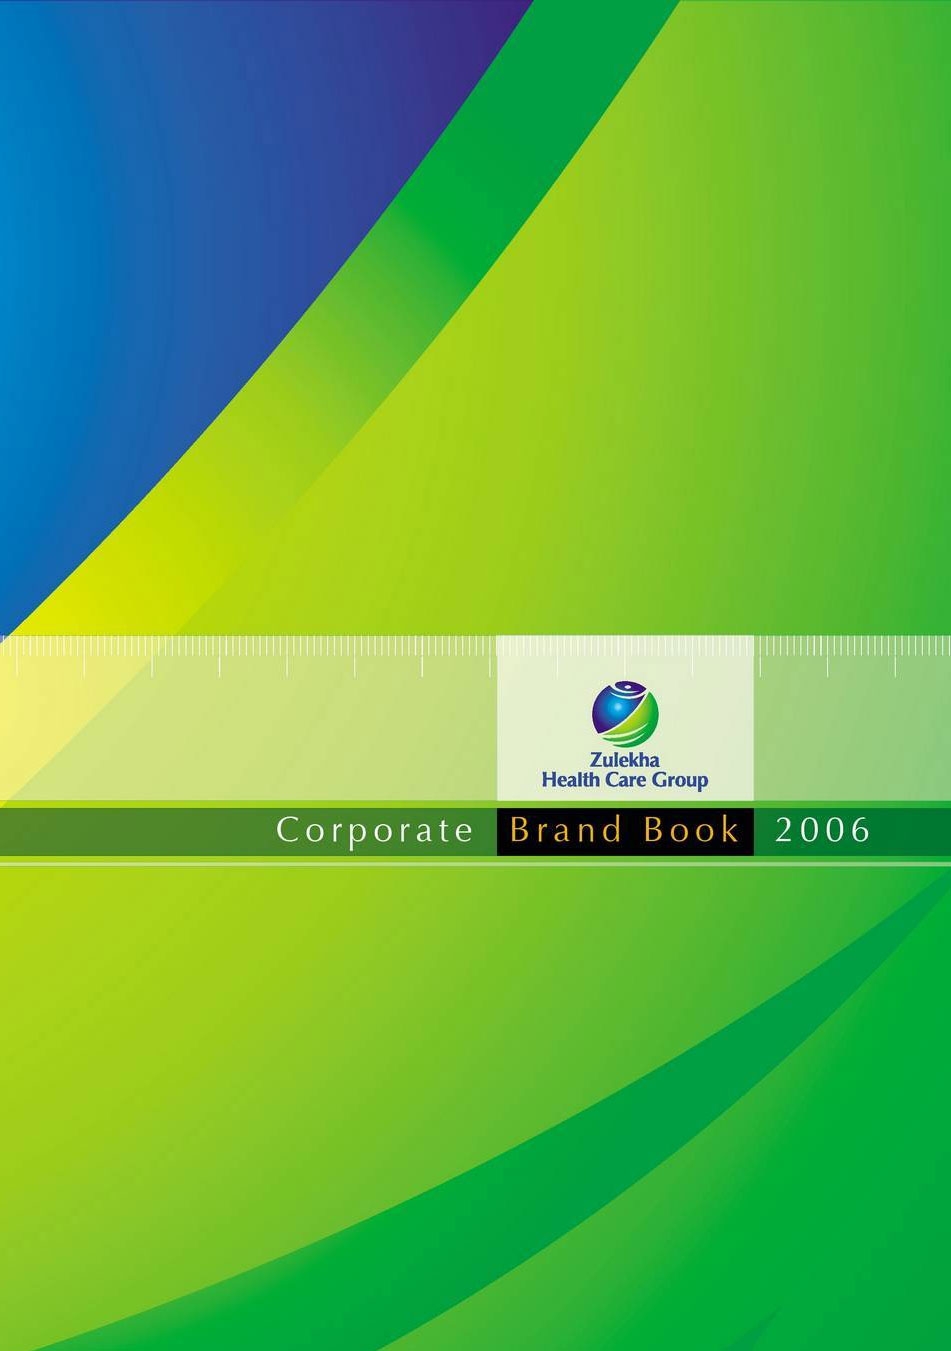 Zulekha Health Care Group Corporate Brand Book